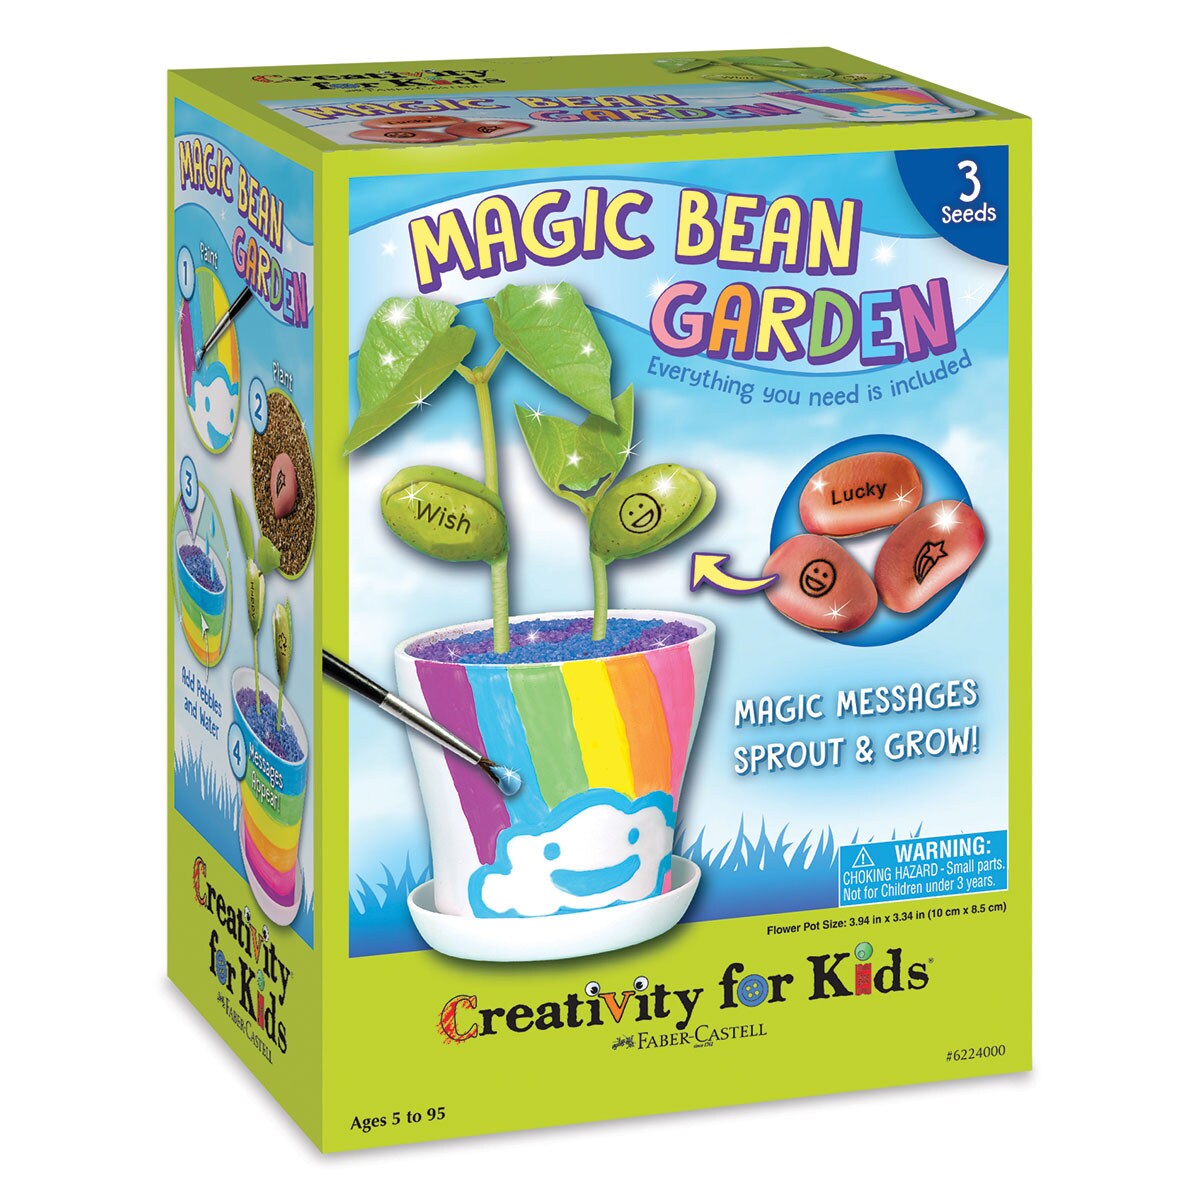 Creativity for Kids Magic Bean Garden